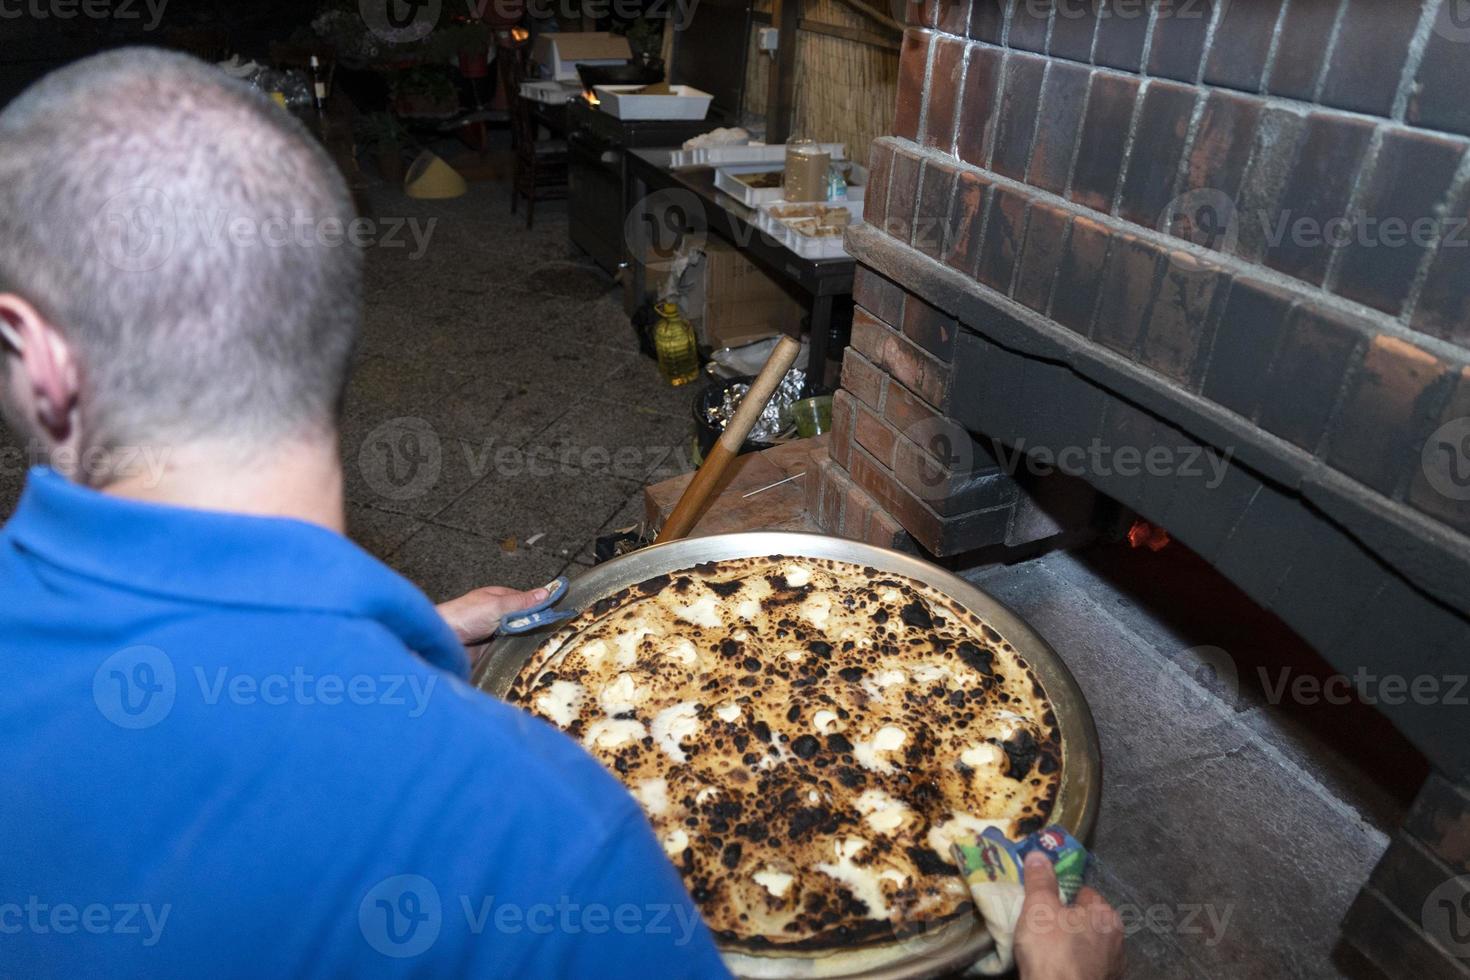 recco focaccia kaas Italiaans vlak brood hout oven gebakken traditioneel bord foto